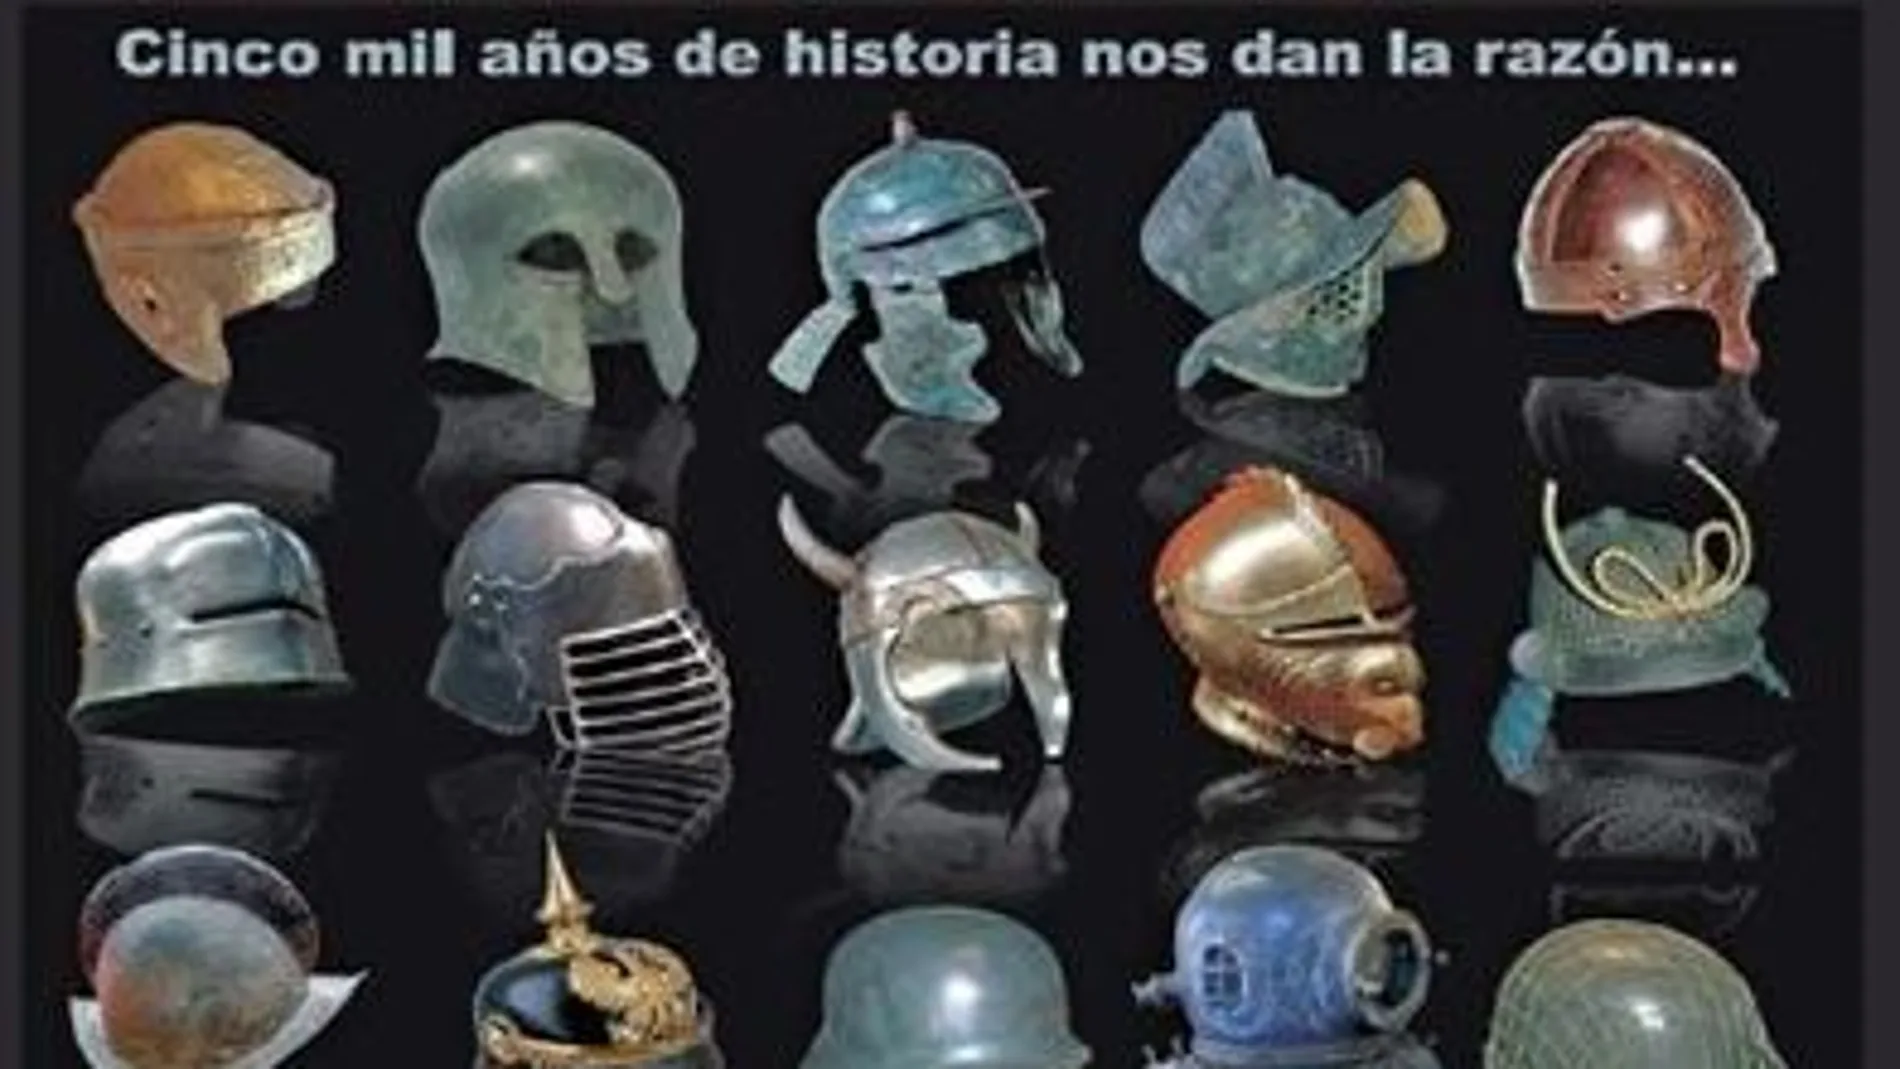 La original campaña de la Guardia Civil para fomentar el uso del casco